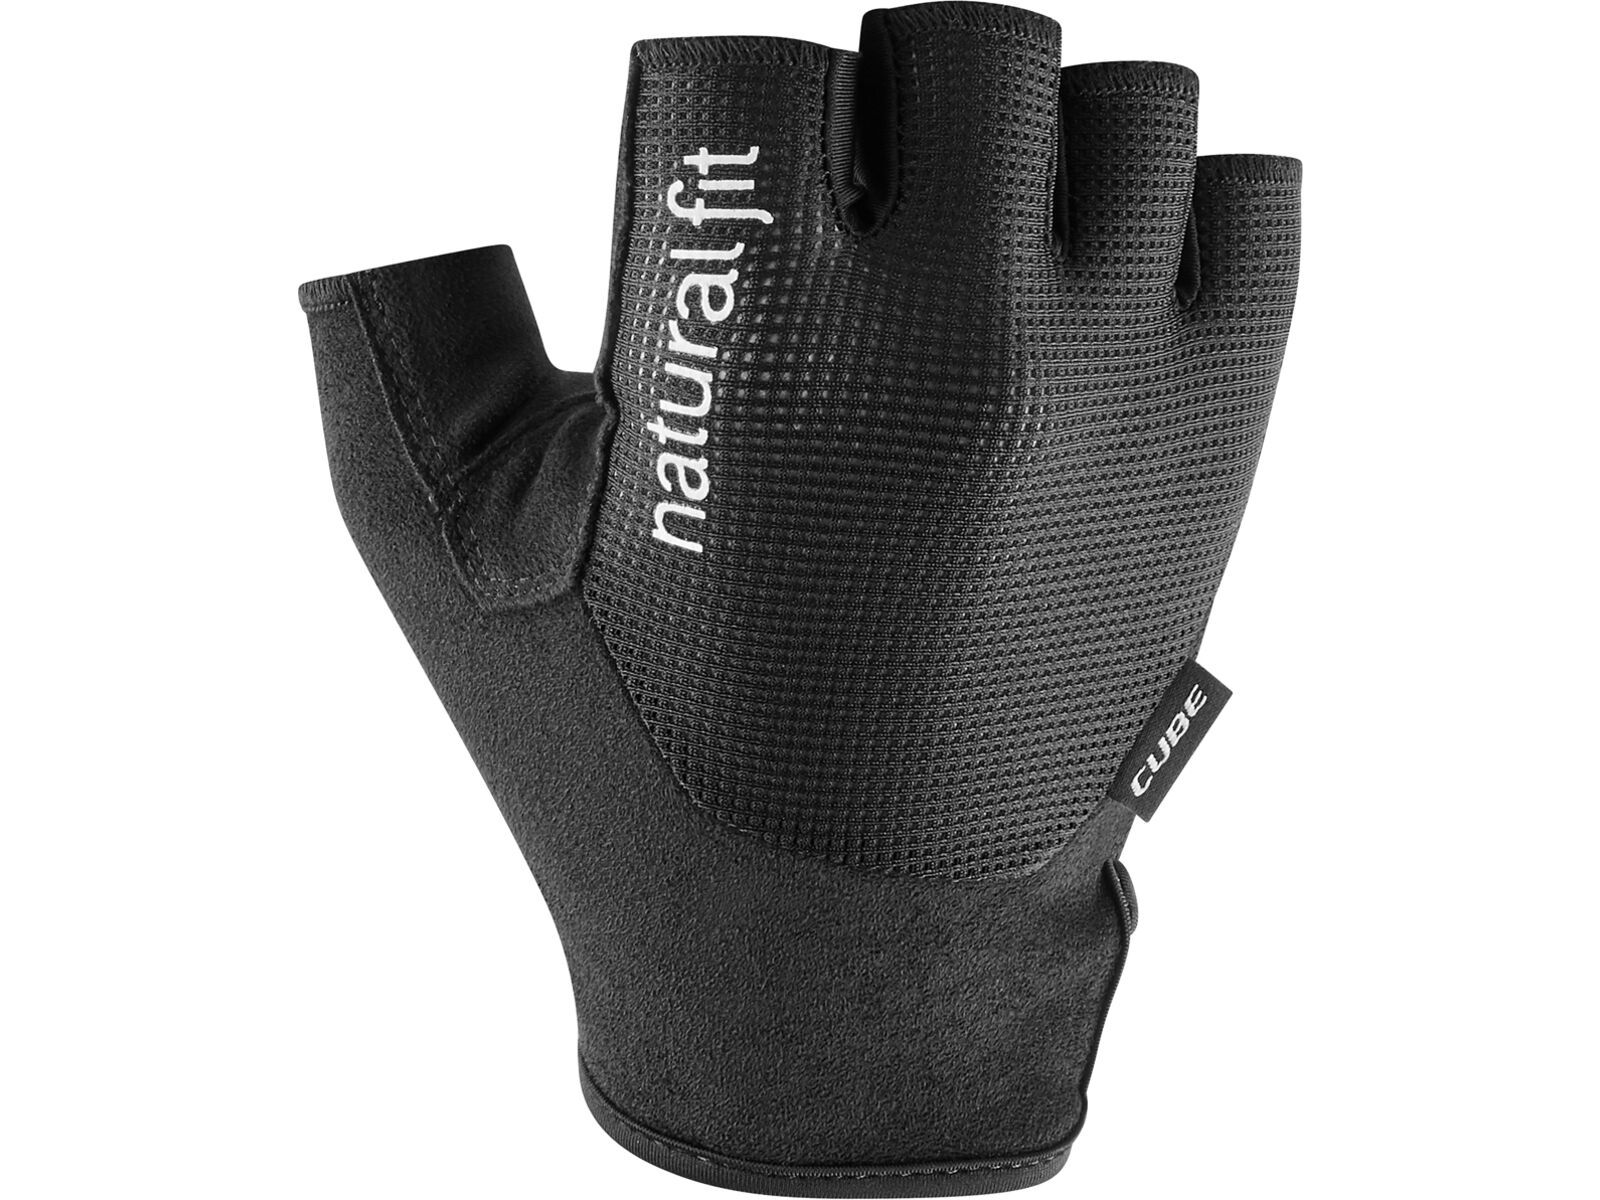 Cube Handschuhe Kurzfinger X Natural Fit, black | Bild 1